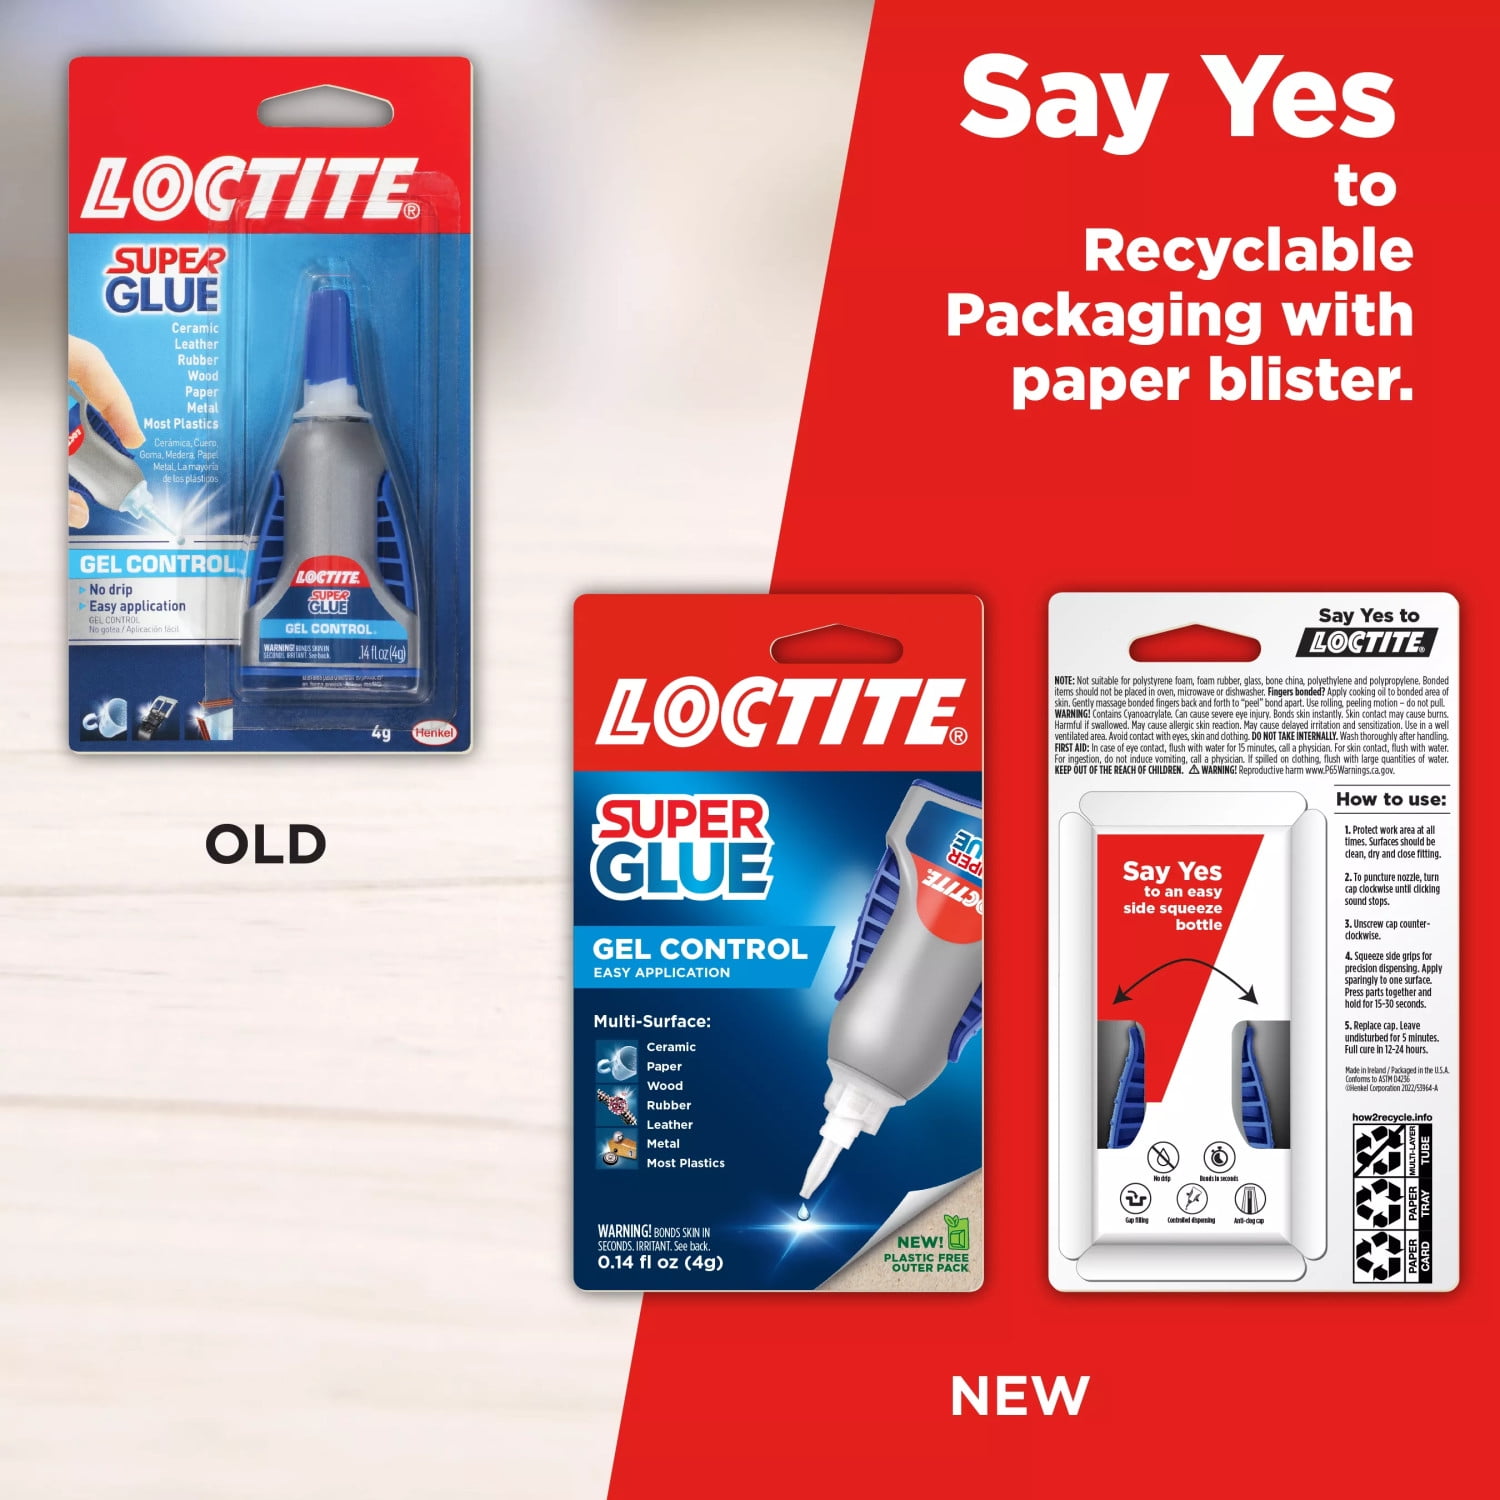 Loctite Super Glue Gel Control, Pack of 1, Clear 4 g Bottle 